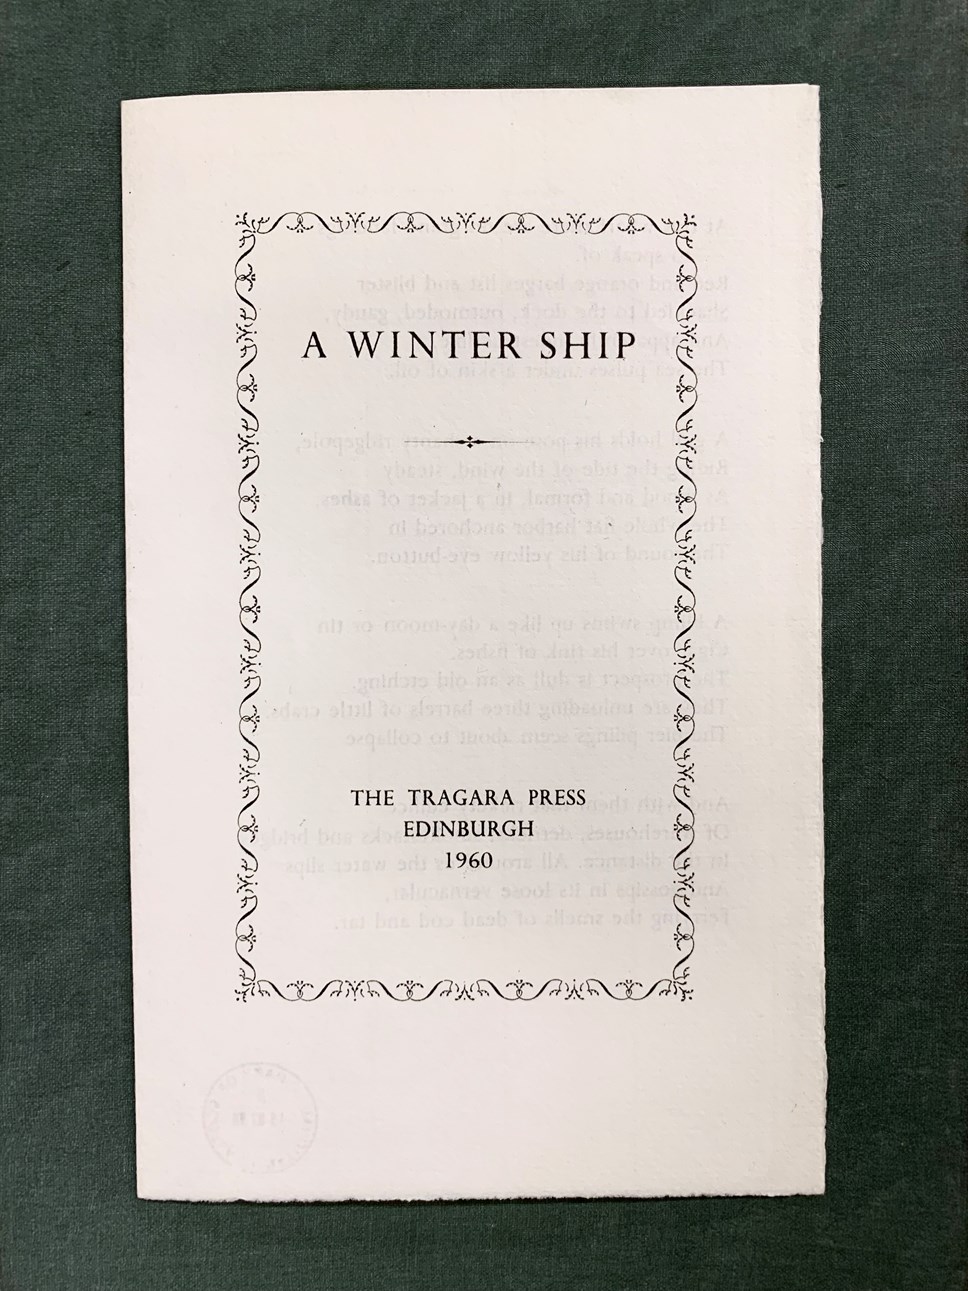 A Winter Ship by Sylvia Plath, printed by Tragara Press in 1960